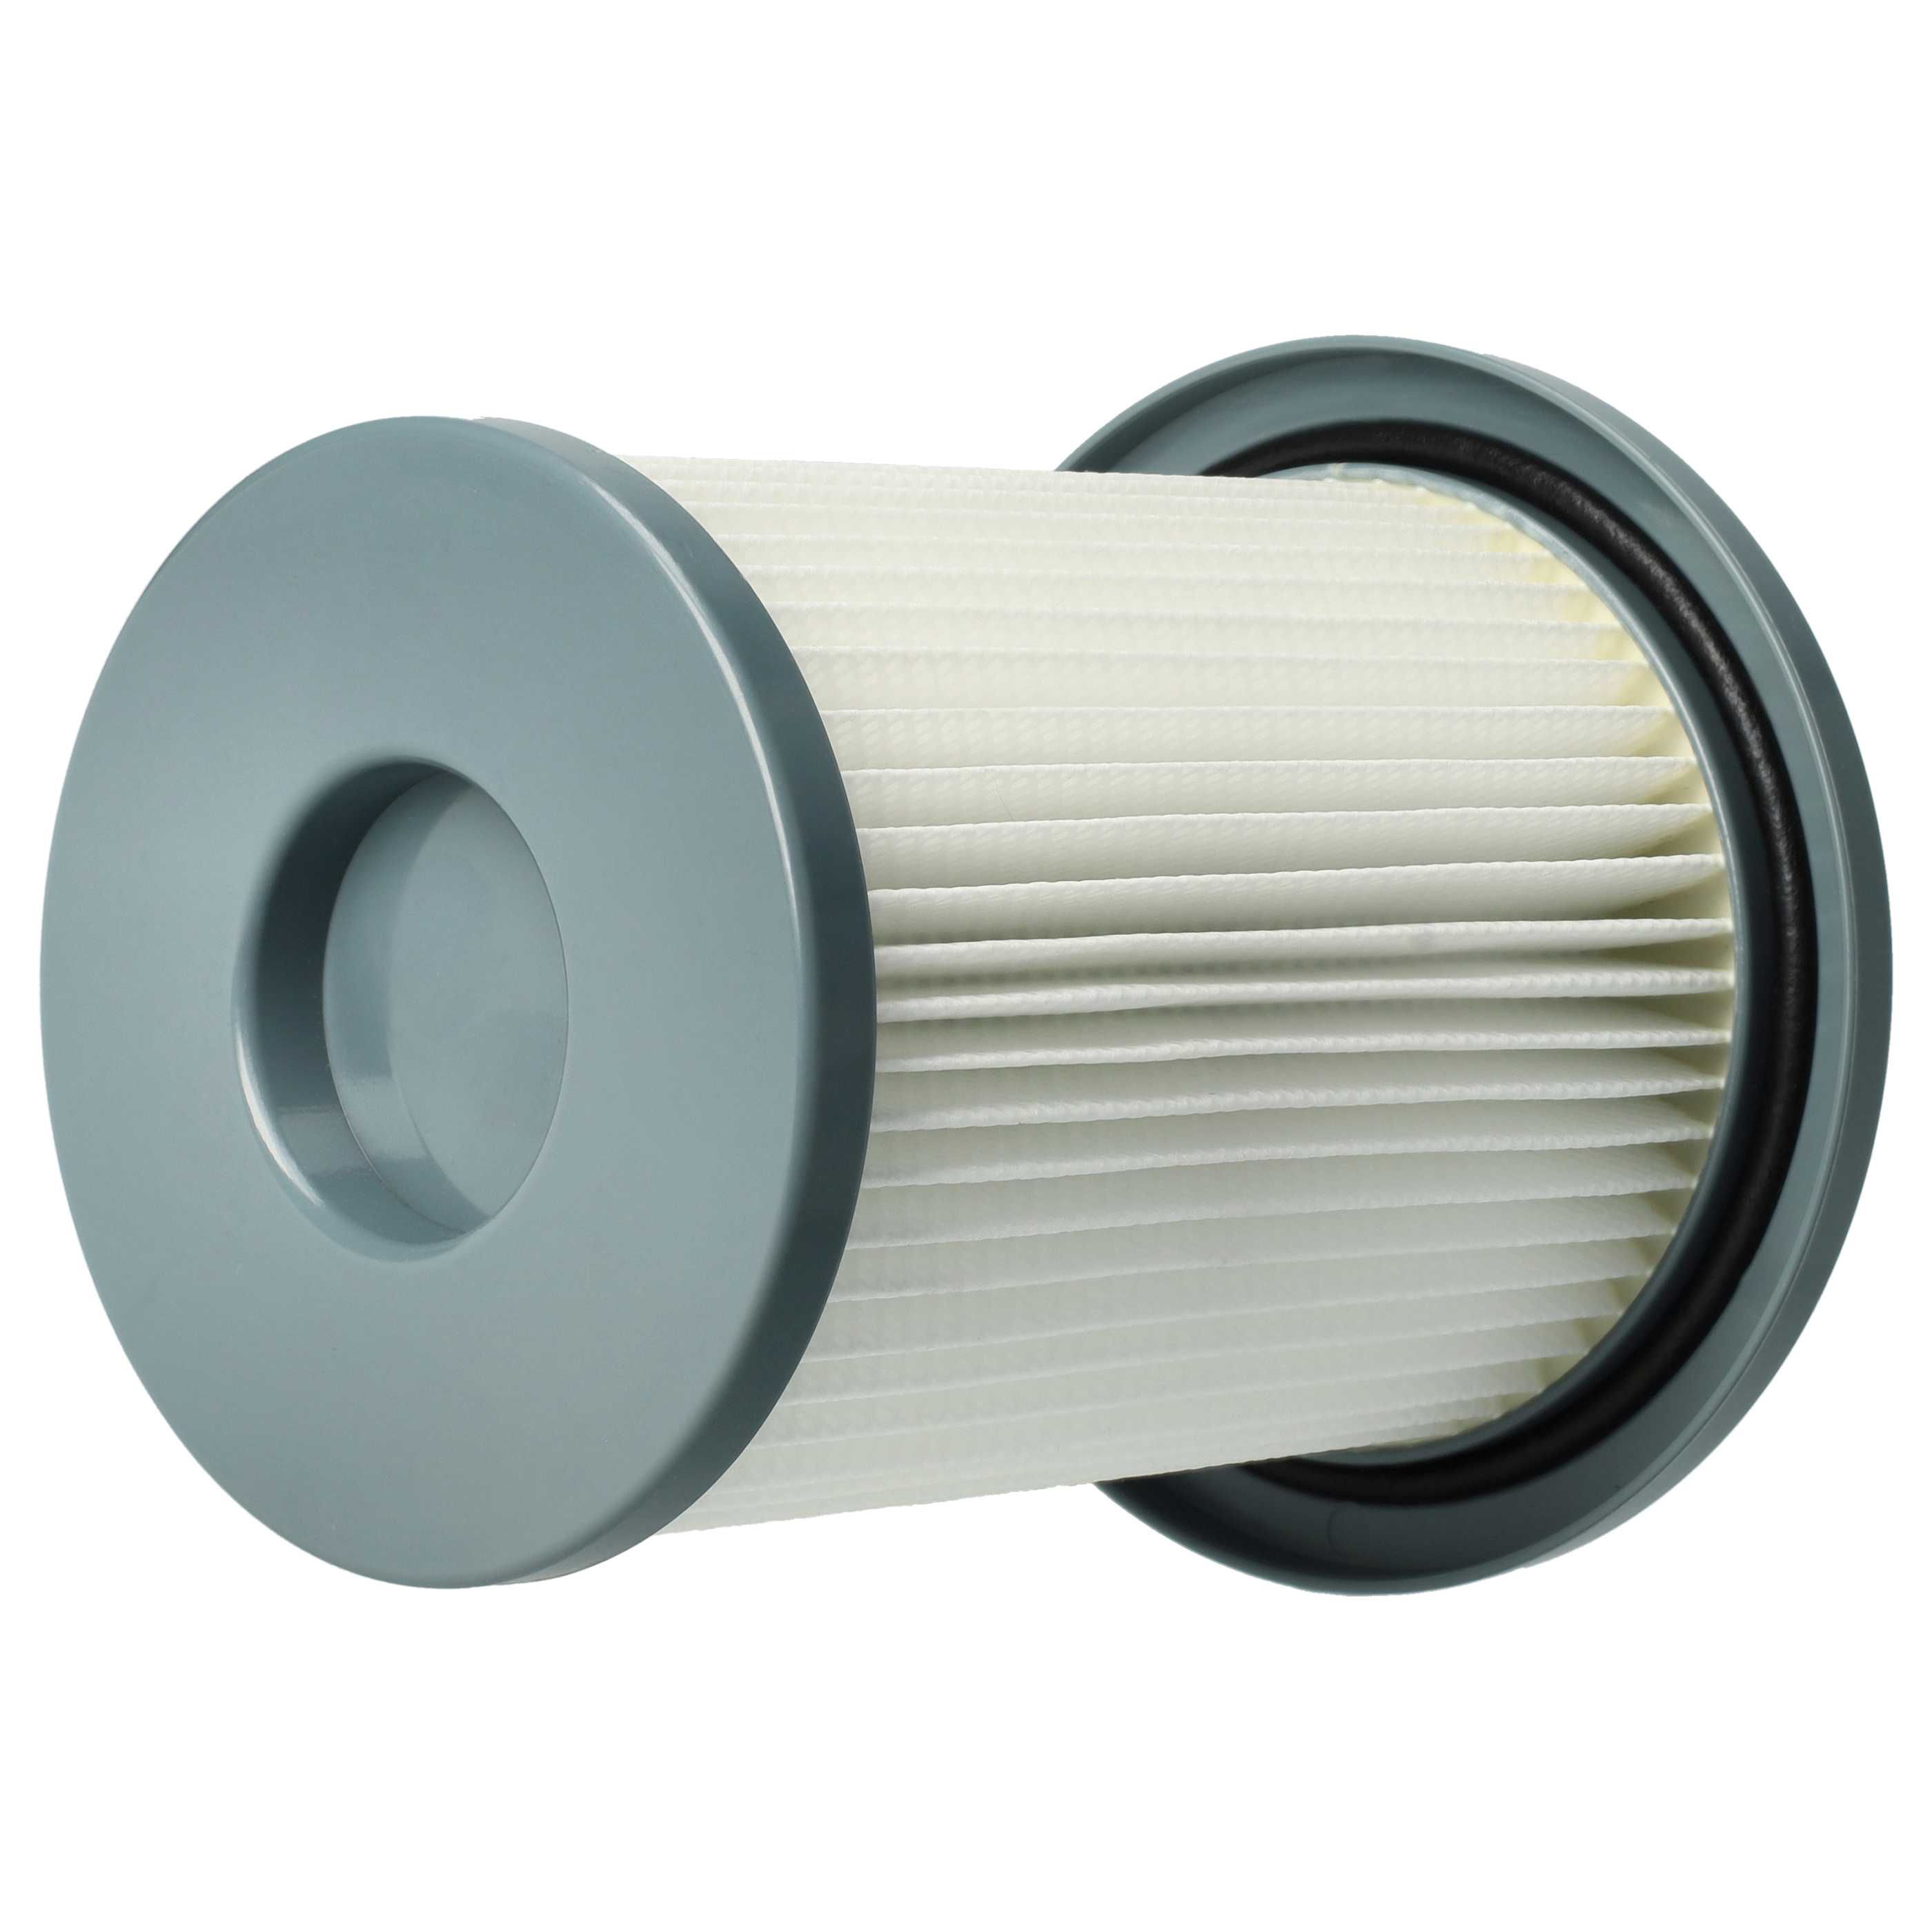 1x HEPA filter replaces Philips 432200909790, 432200493320 for PhilipsVacuum Cleaner